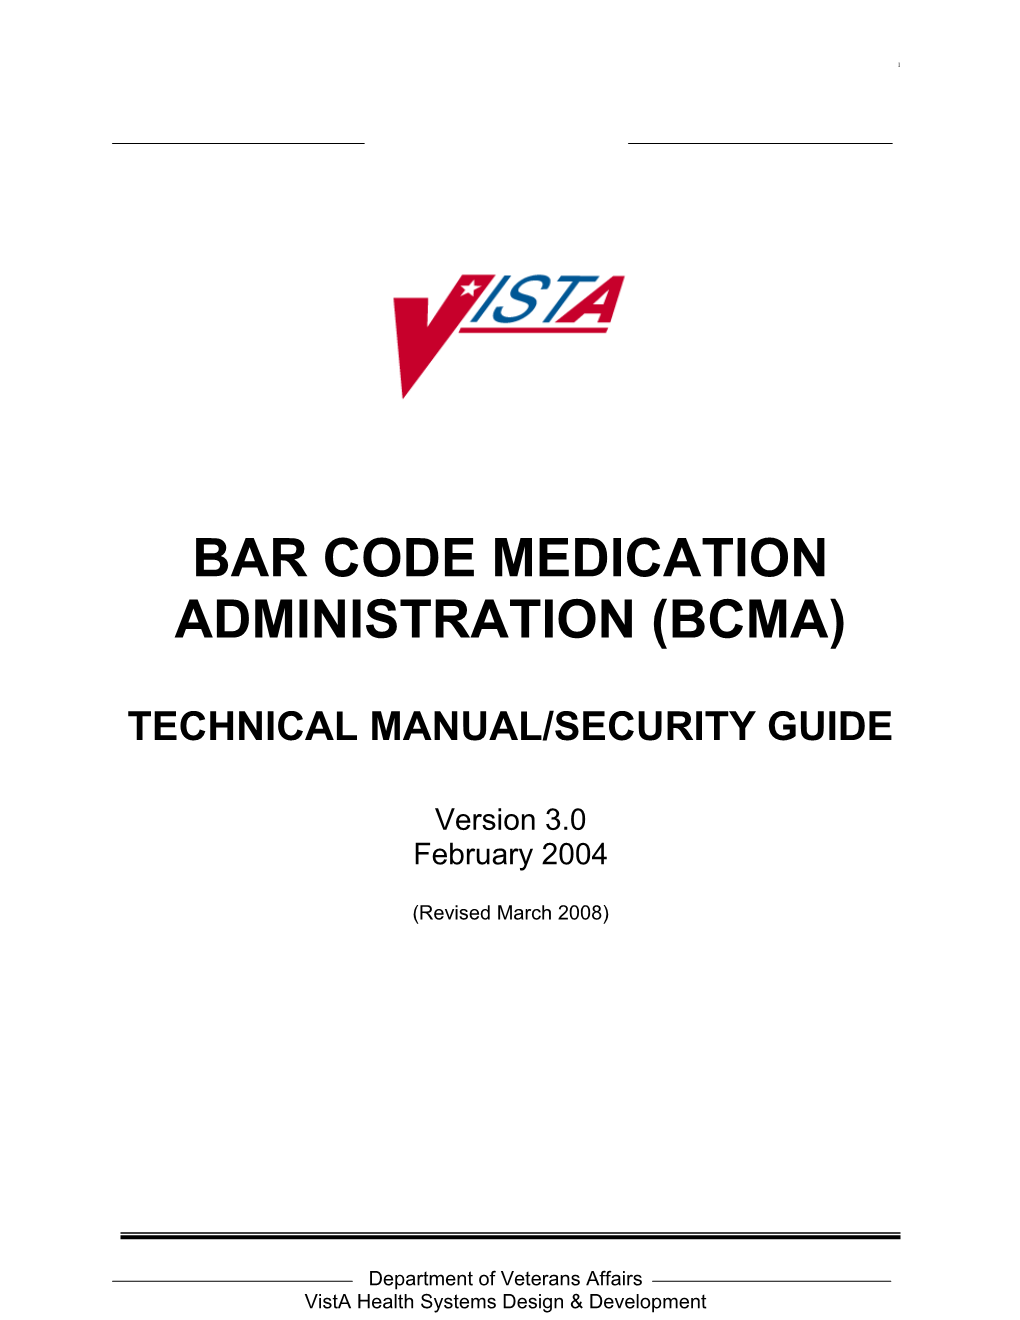 BCMA Technical Manual